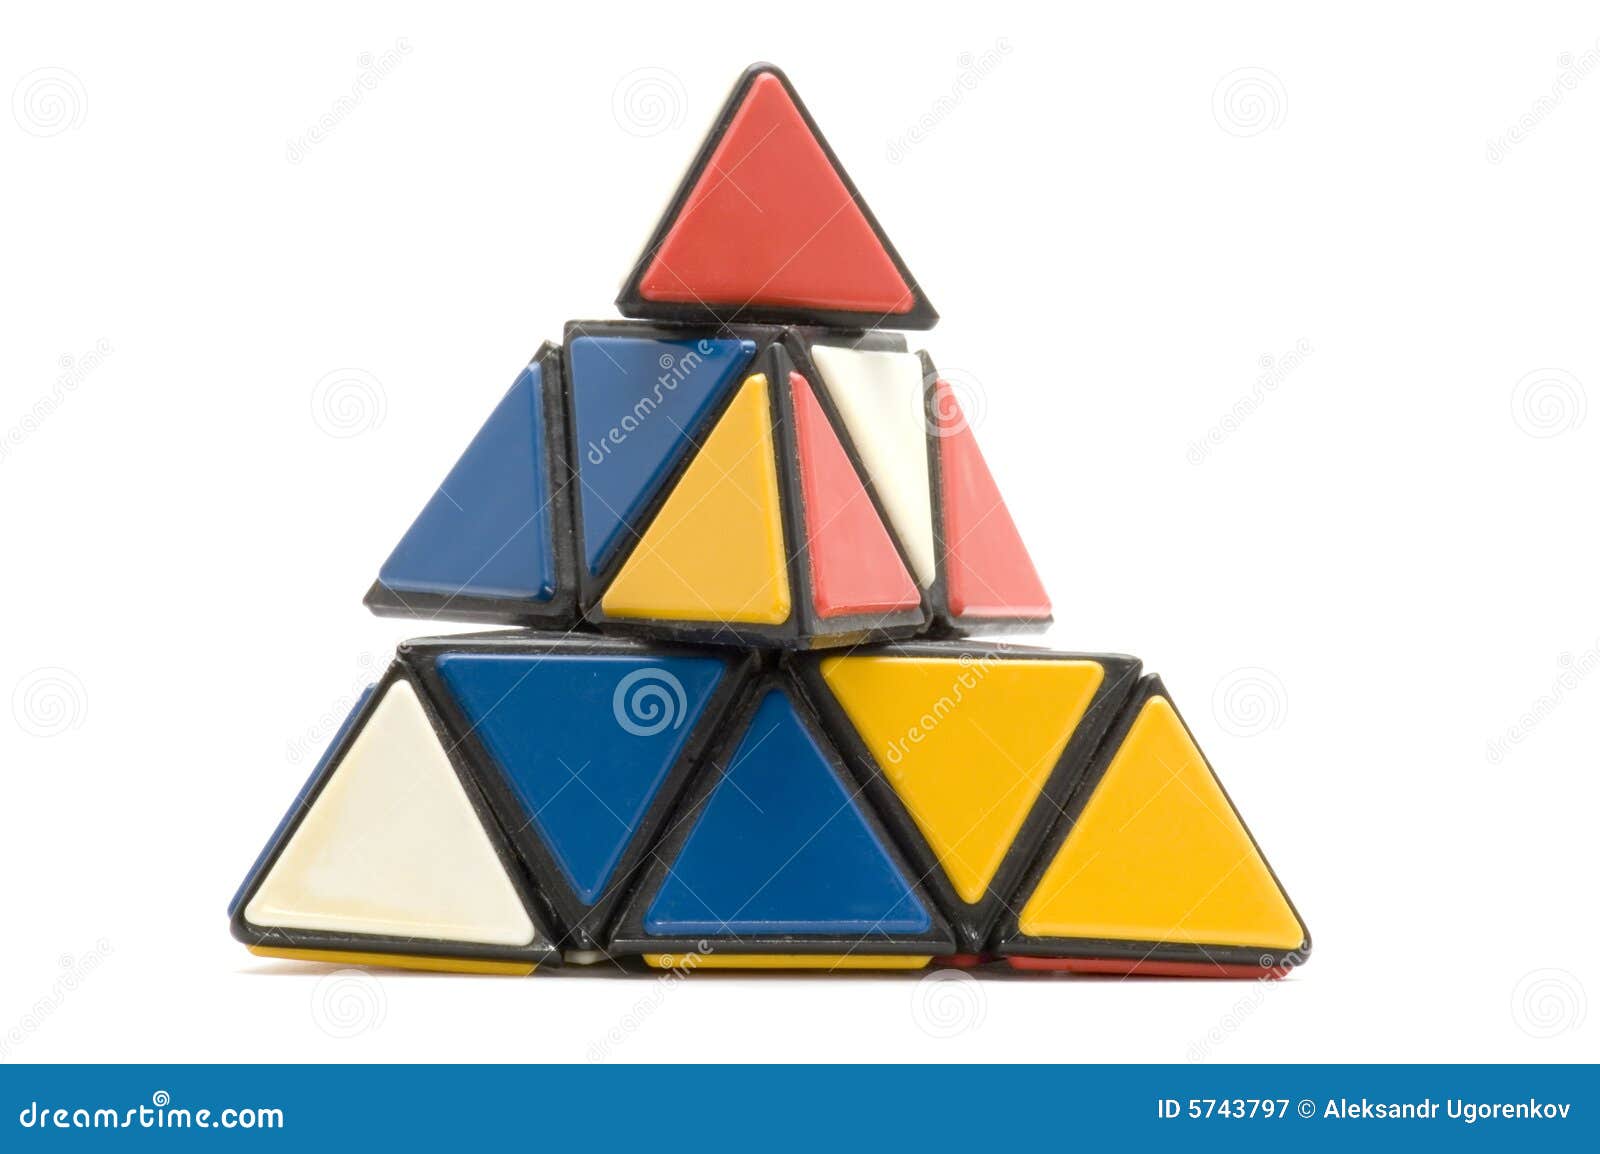 conundrum pyramidion